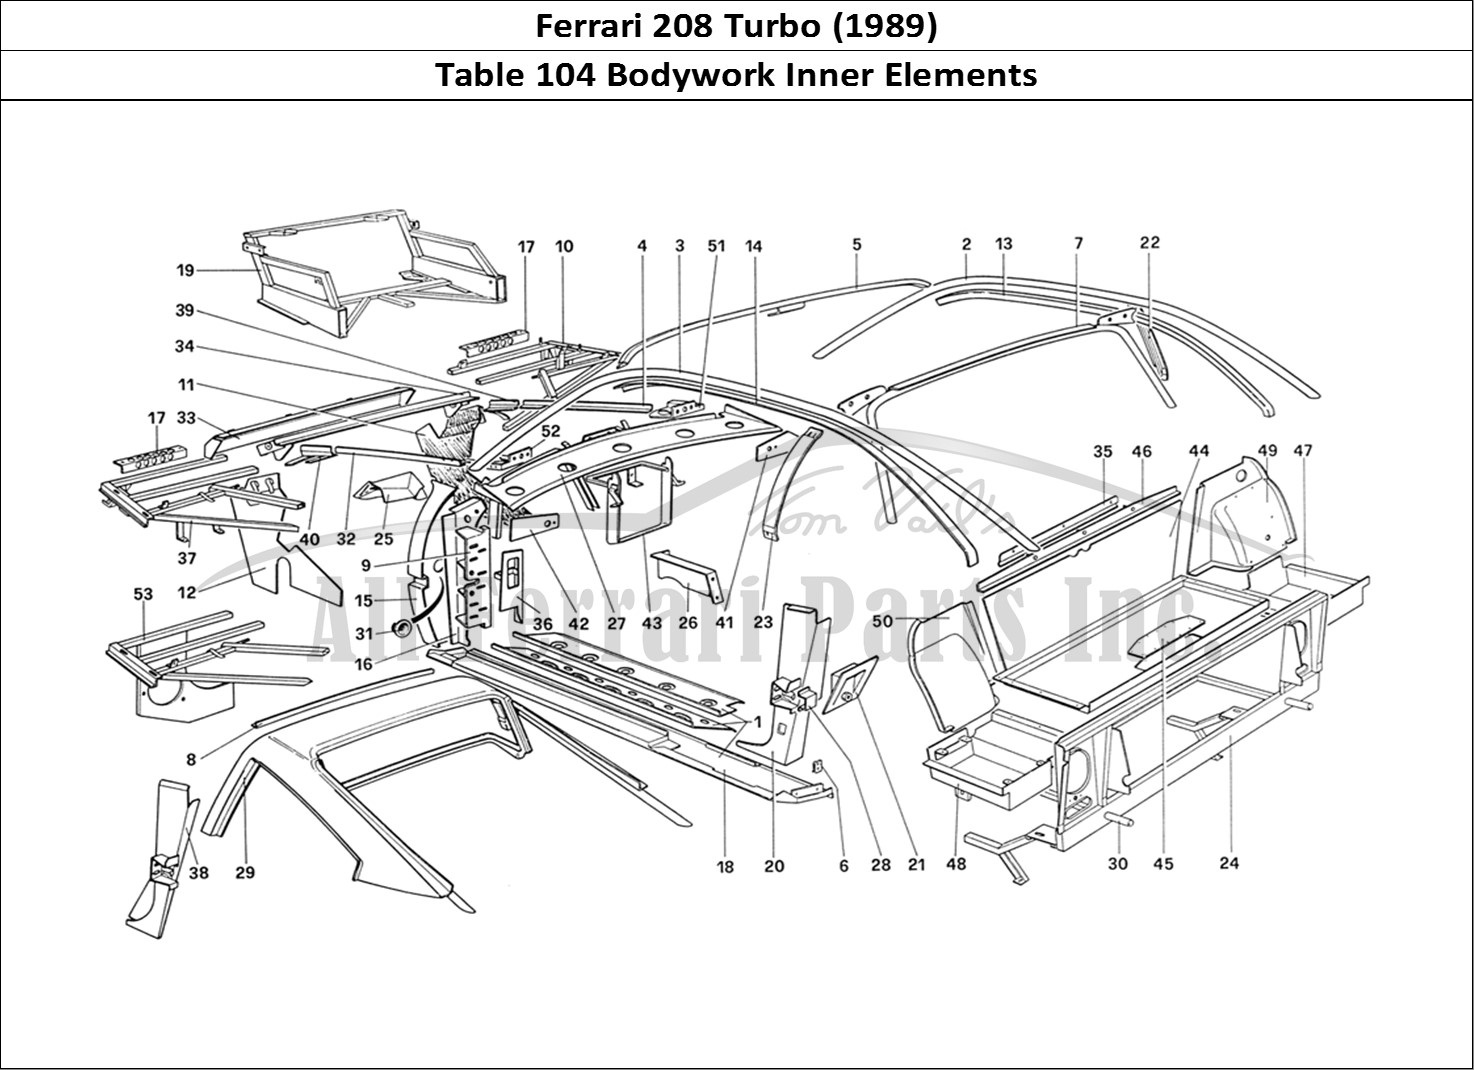 Ferrari Parts Ferrari 208 Turbo (1989) Page 104 Body Shell - Inner Elemen